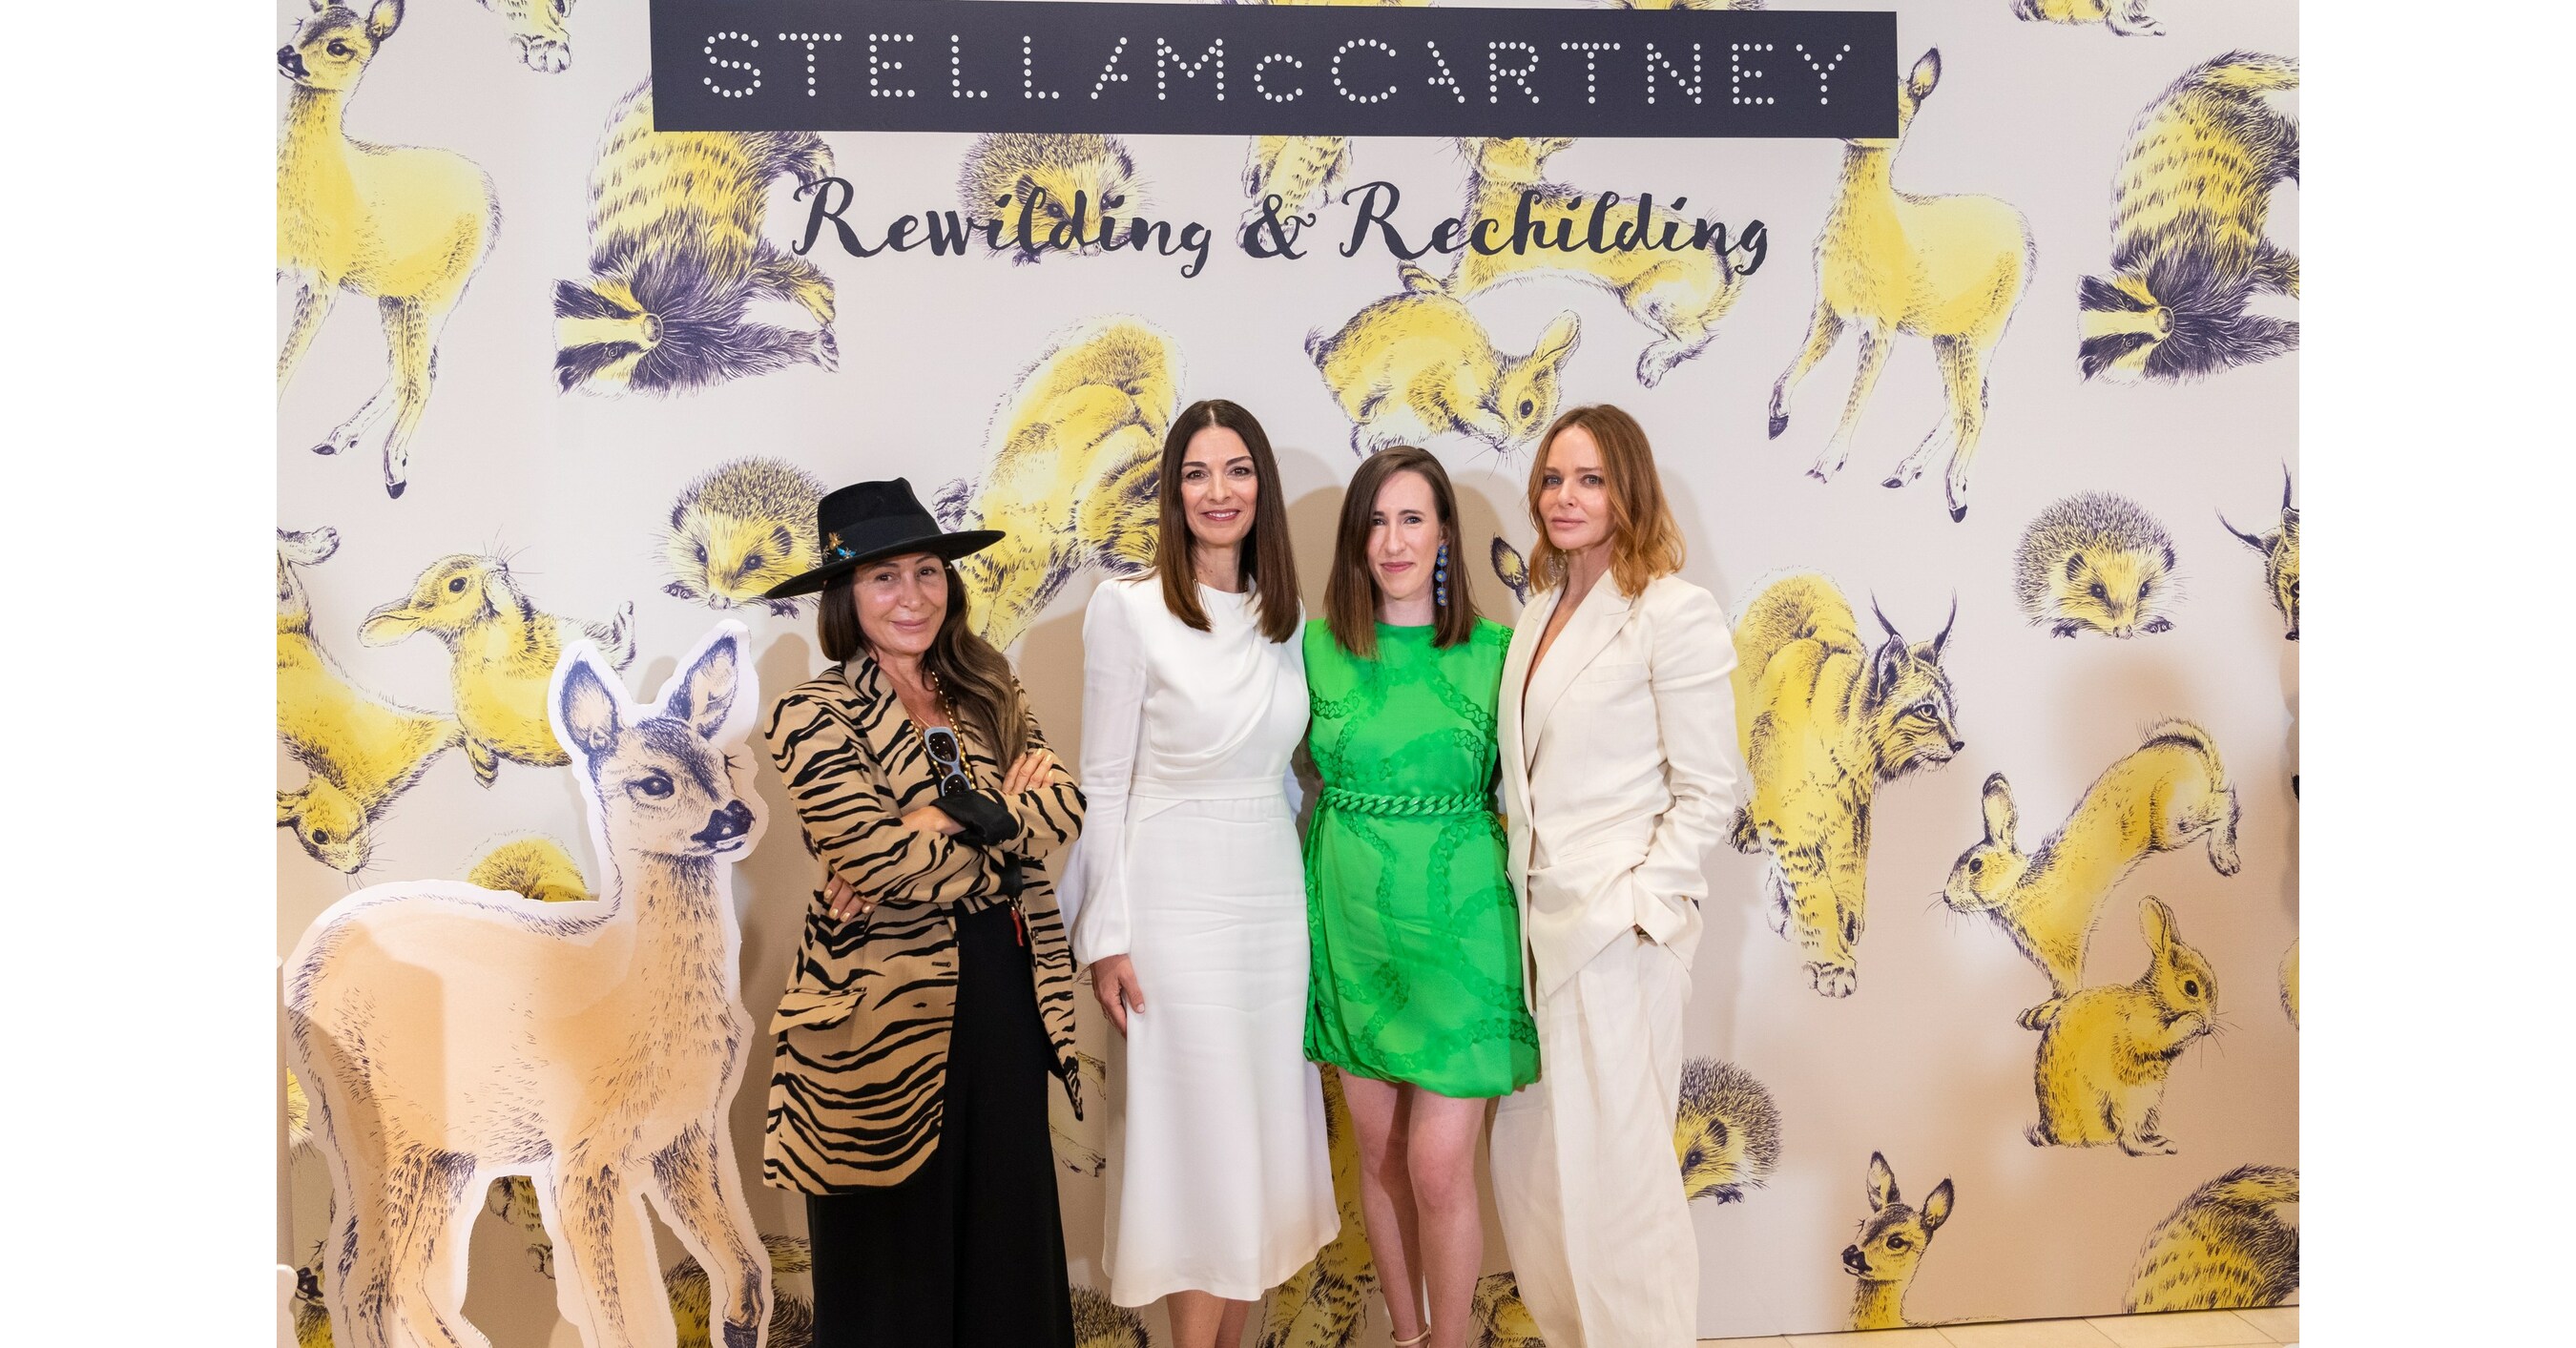 Stella McCartney Talks Sustainability and Fashion's Animal-Free Future